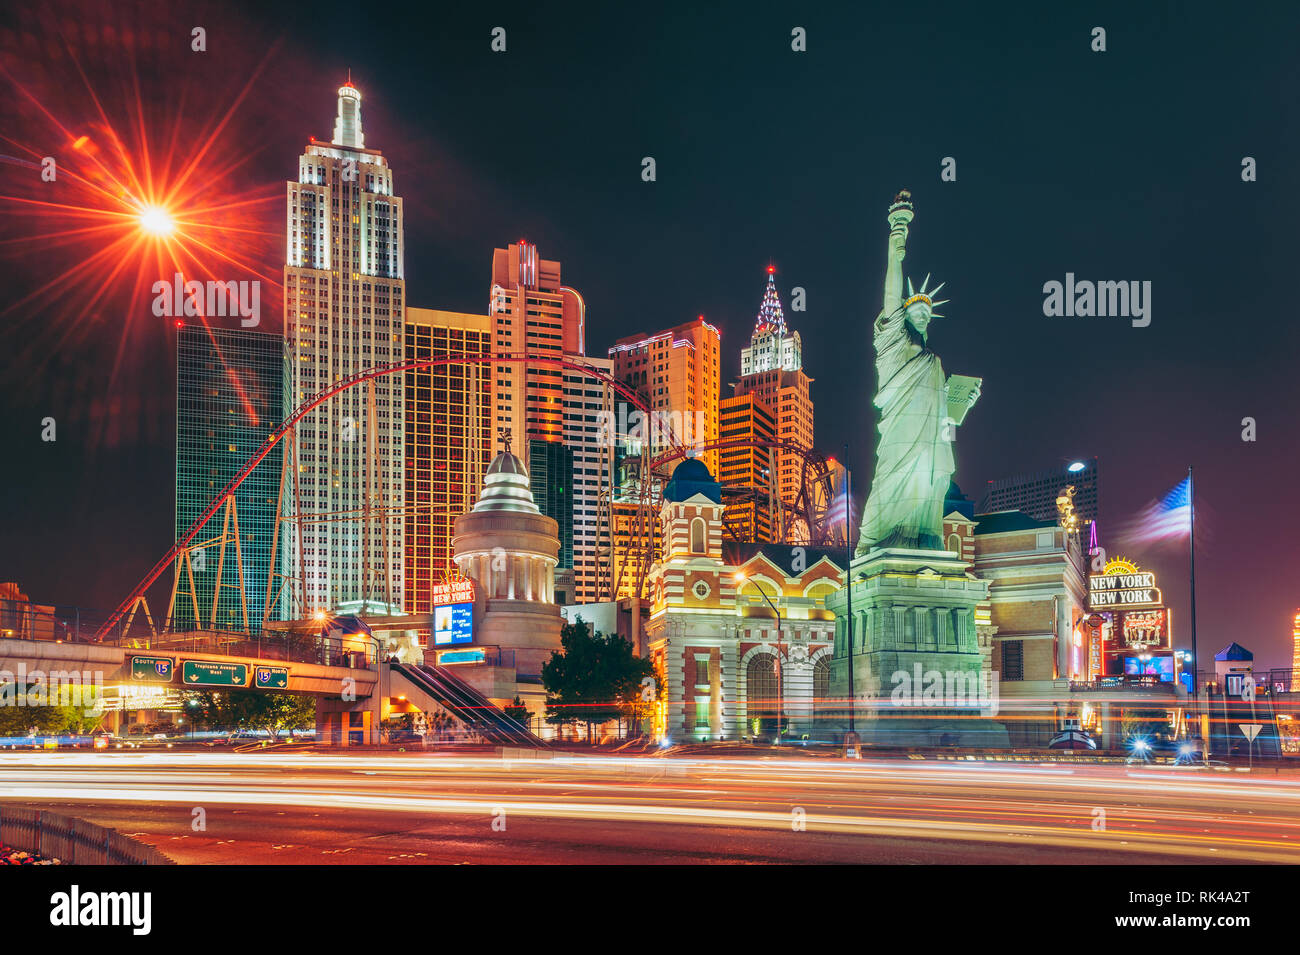 New York New York Hotel and Casino in Las Vegas along The Strip Boulevard in Las Vegas, Nevada, USA at night Stock Photo